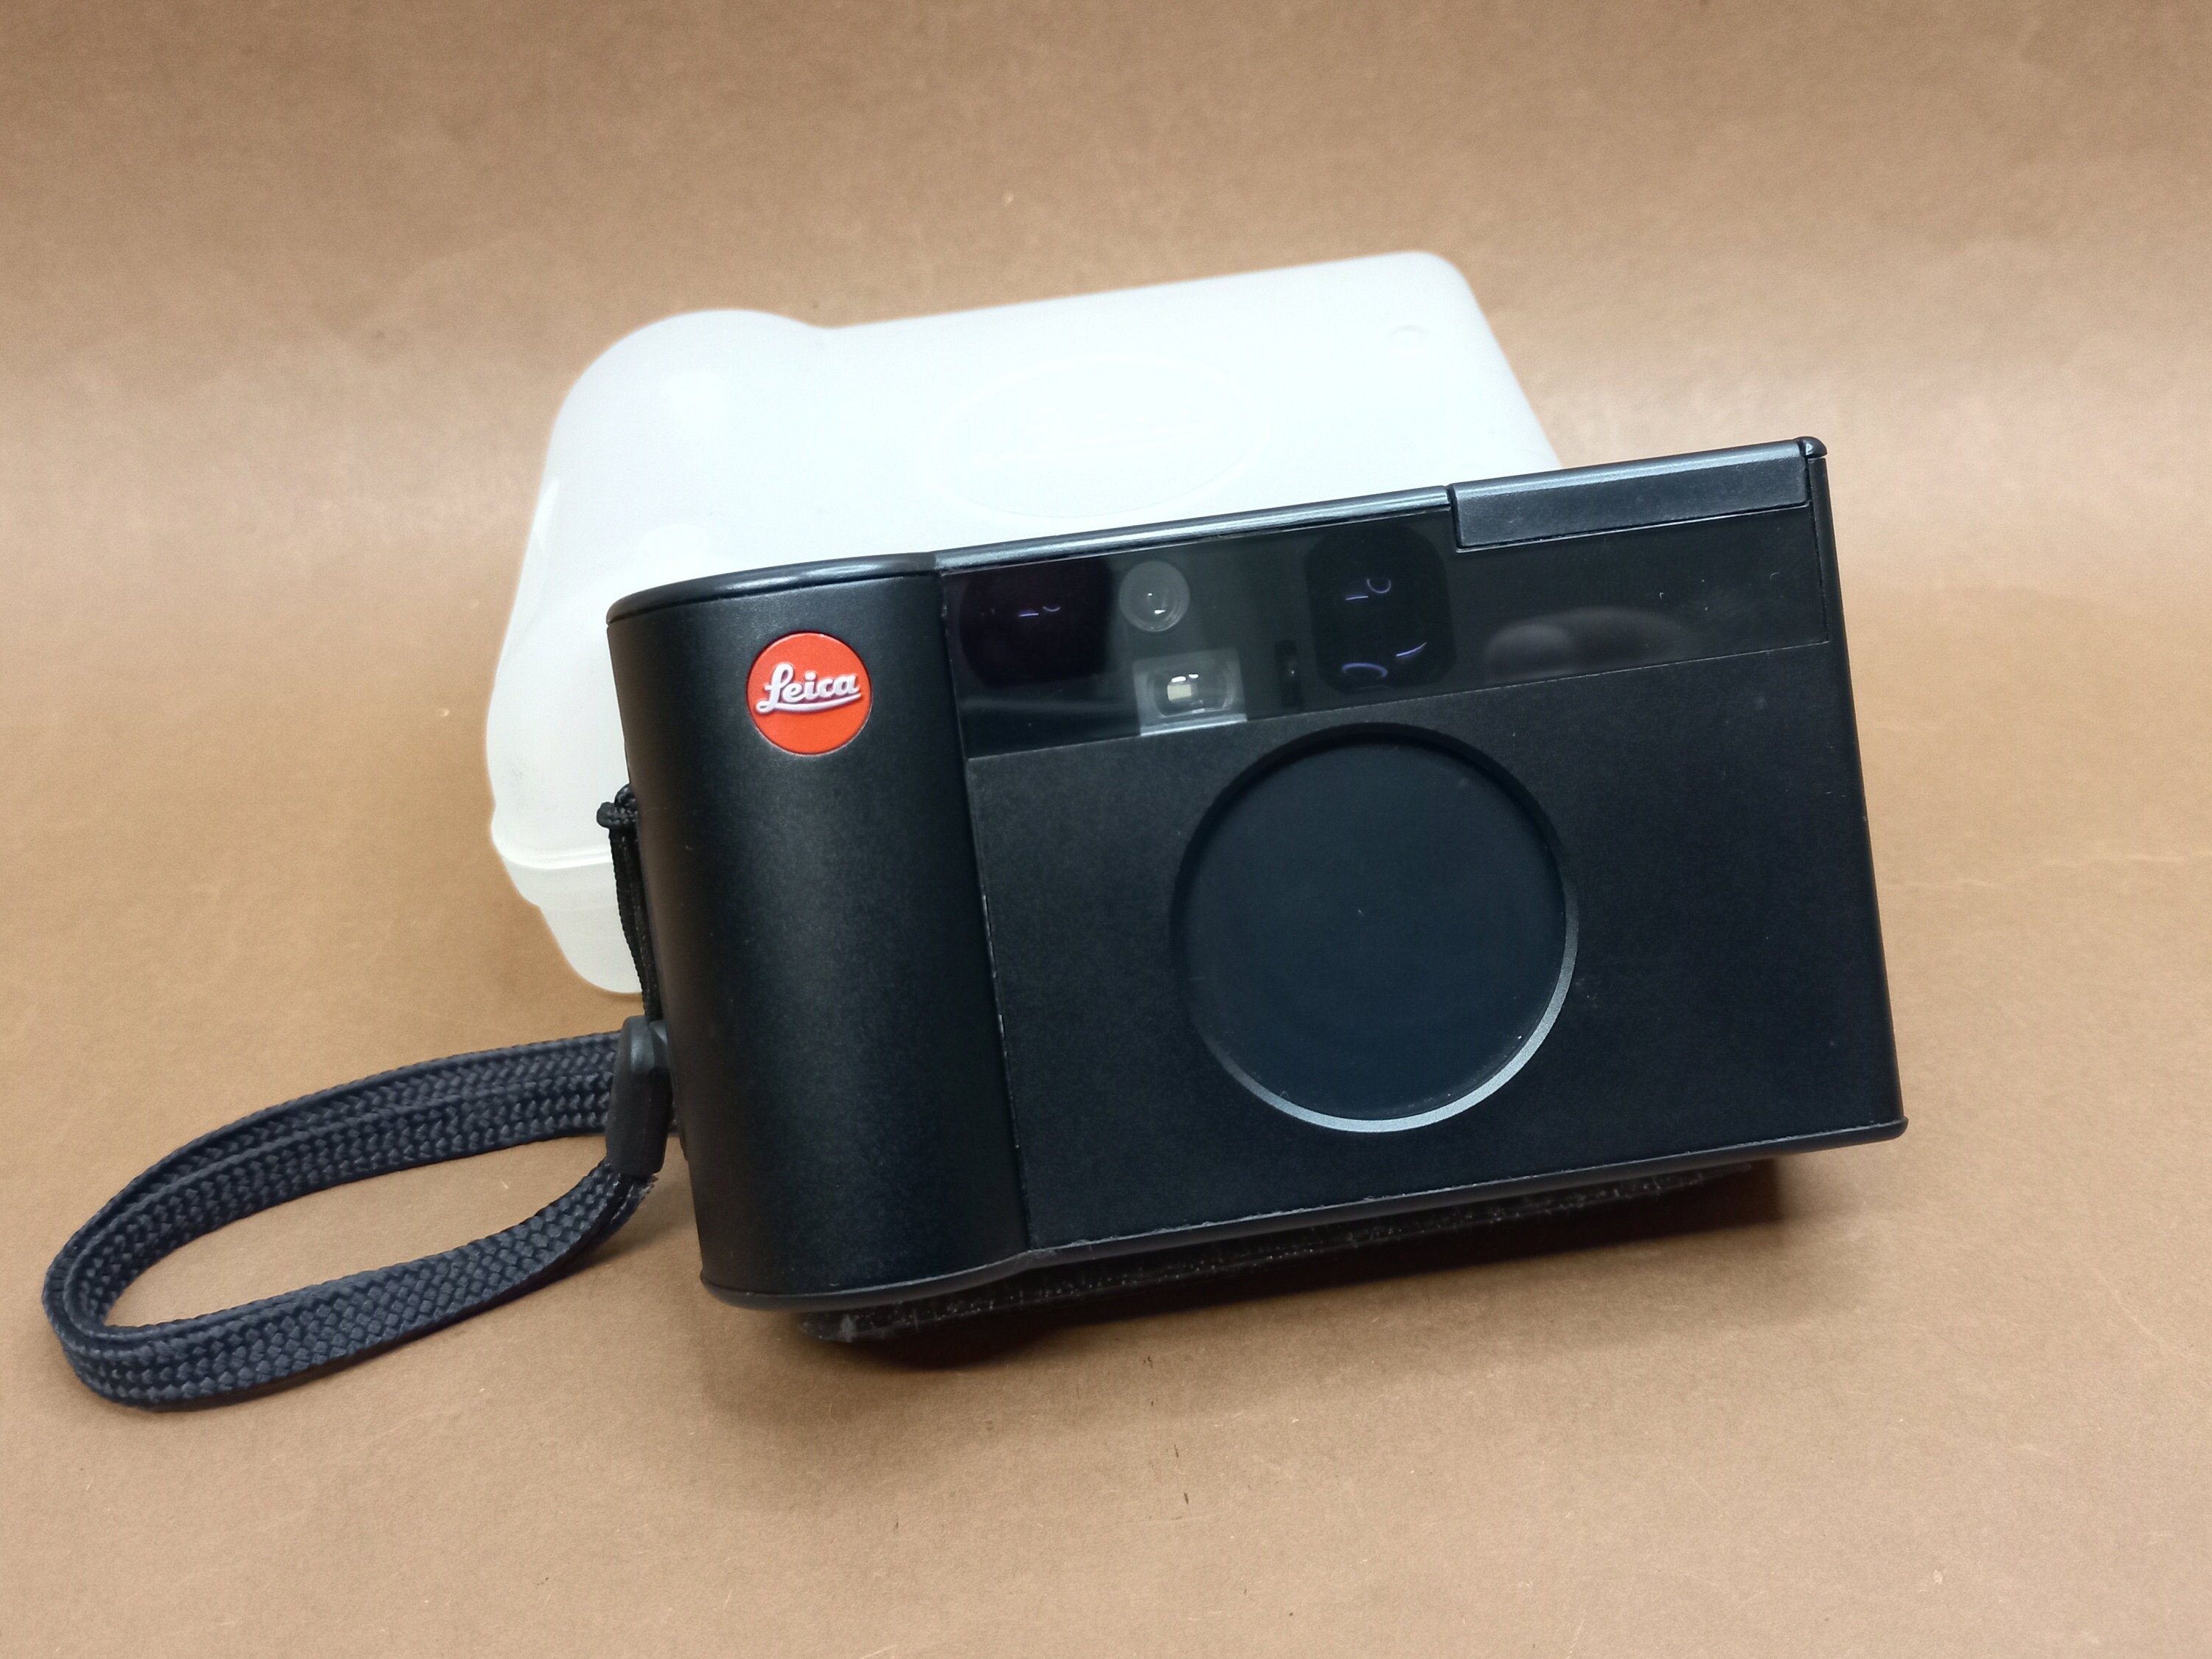 LEICA D-Lux 5 Black Digital Camera From JAPAN [Near Mint